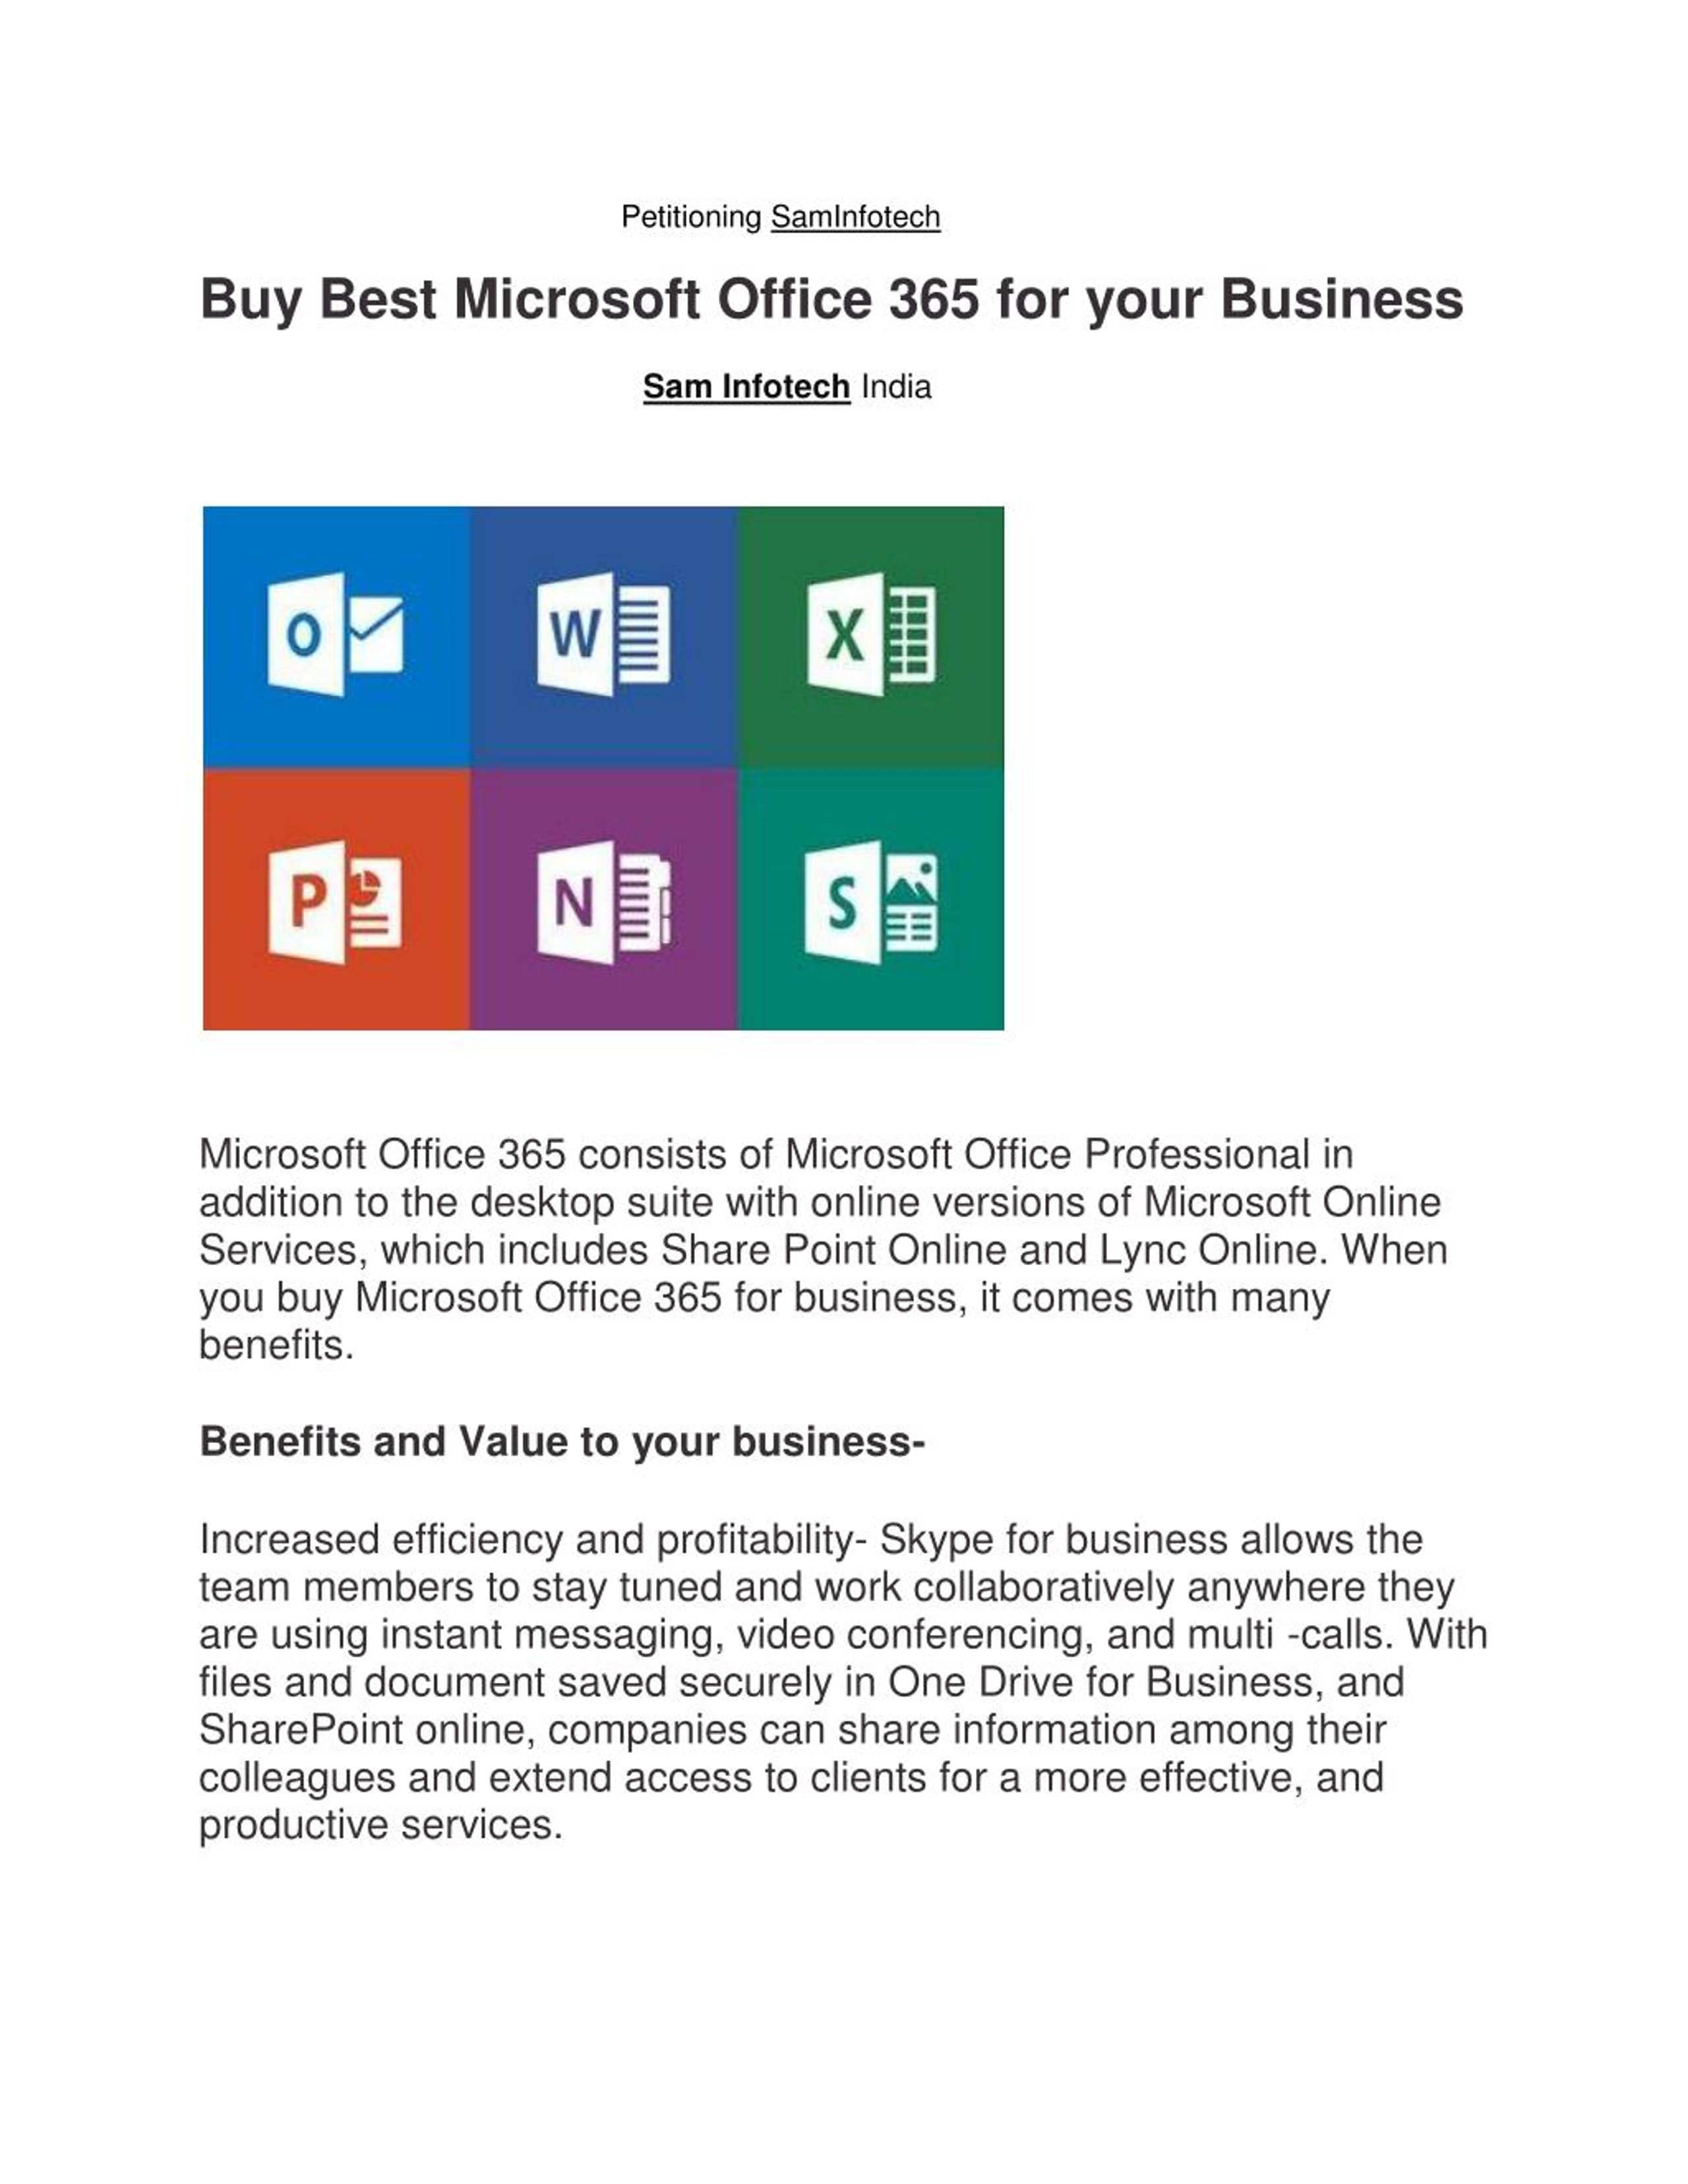 Best Microsoft Office 365 Plan India